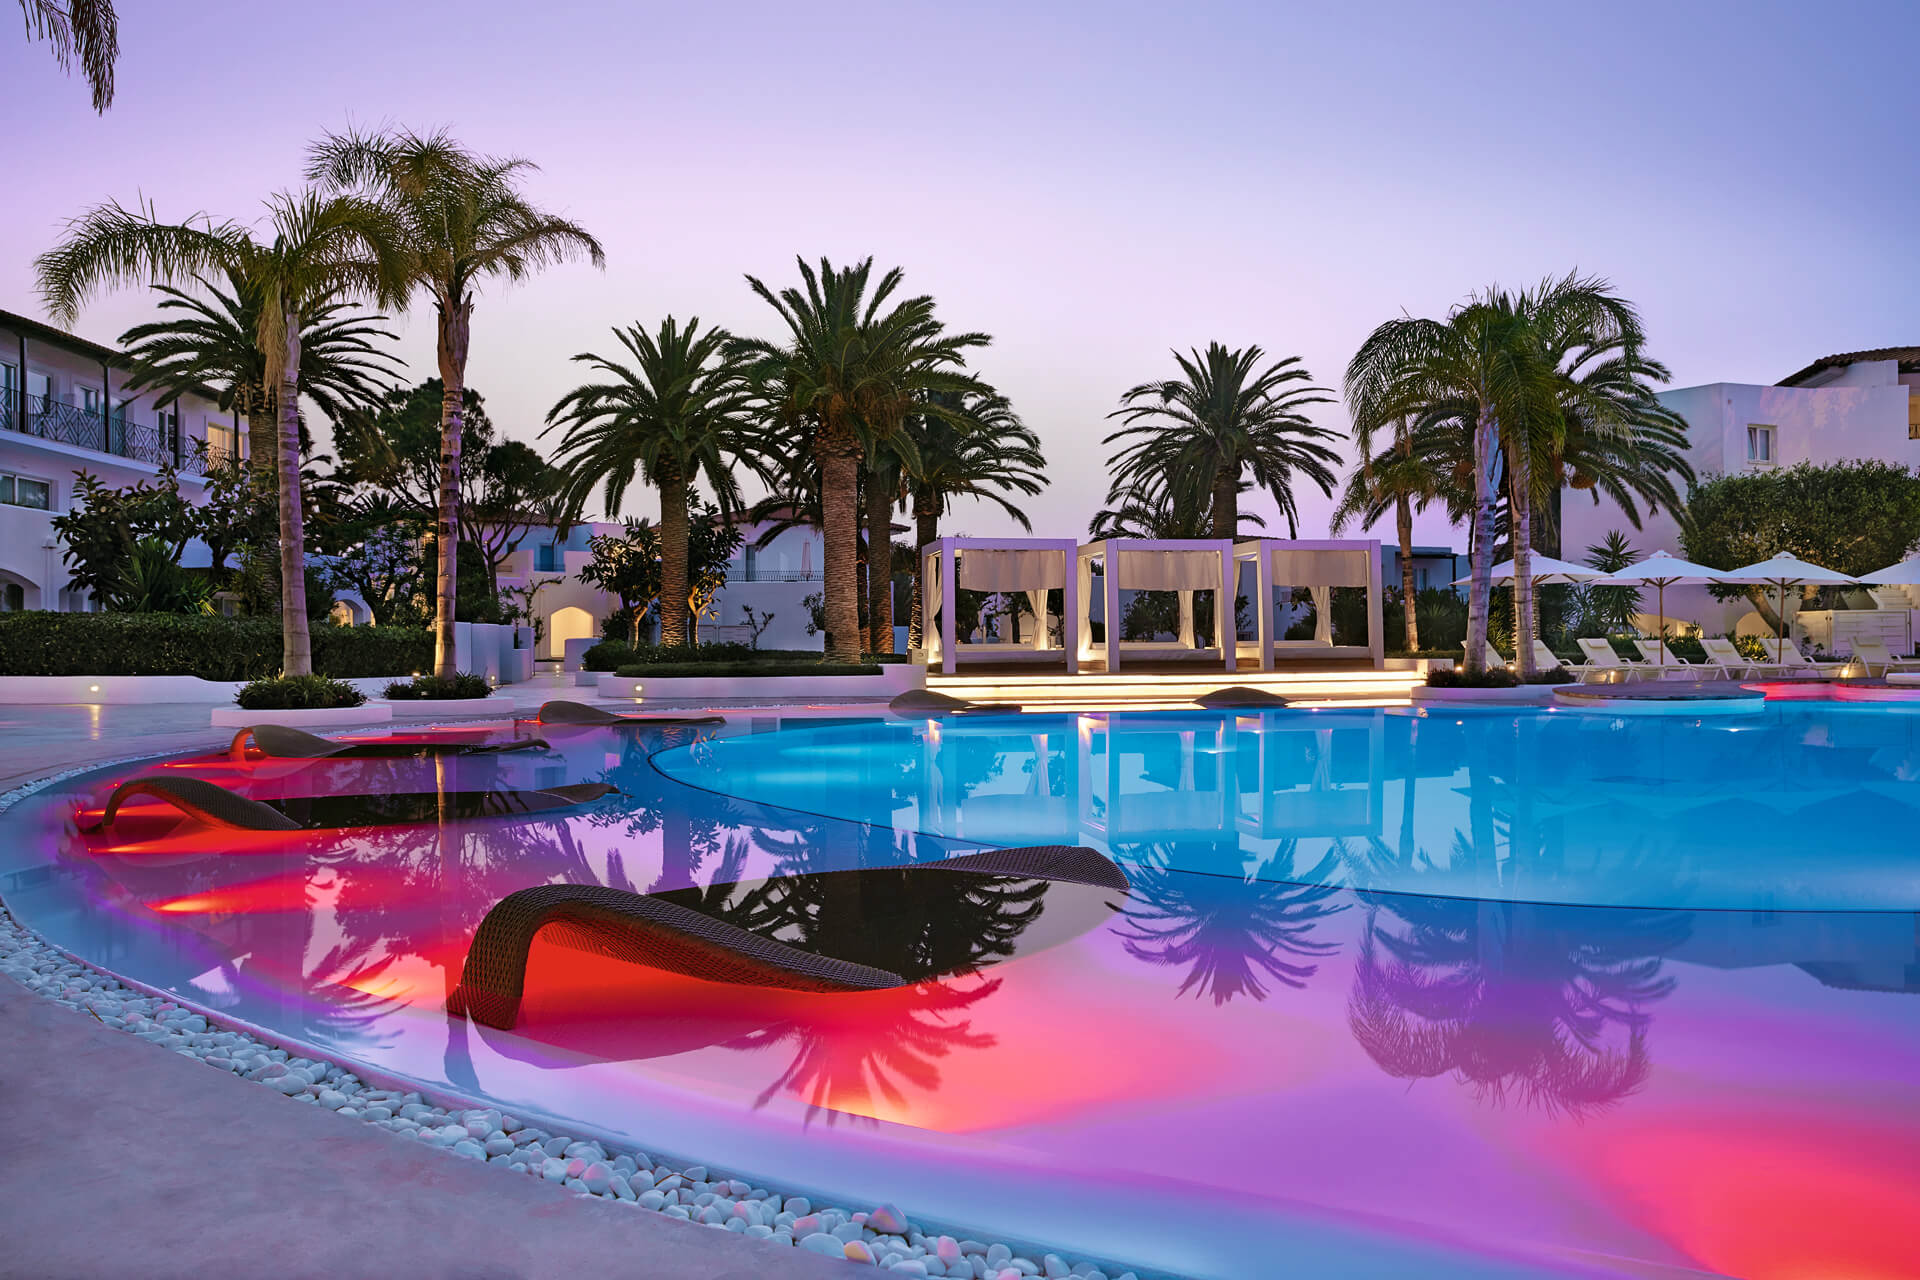 Unique-illuminated-pool-with-leaf-sun-beds